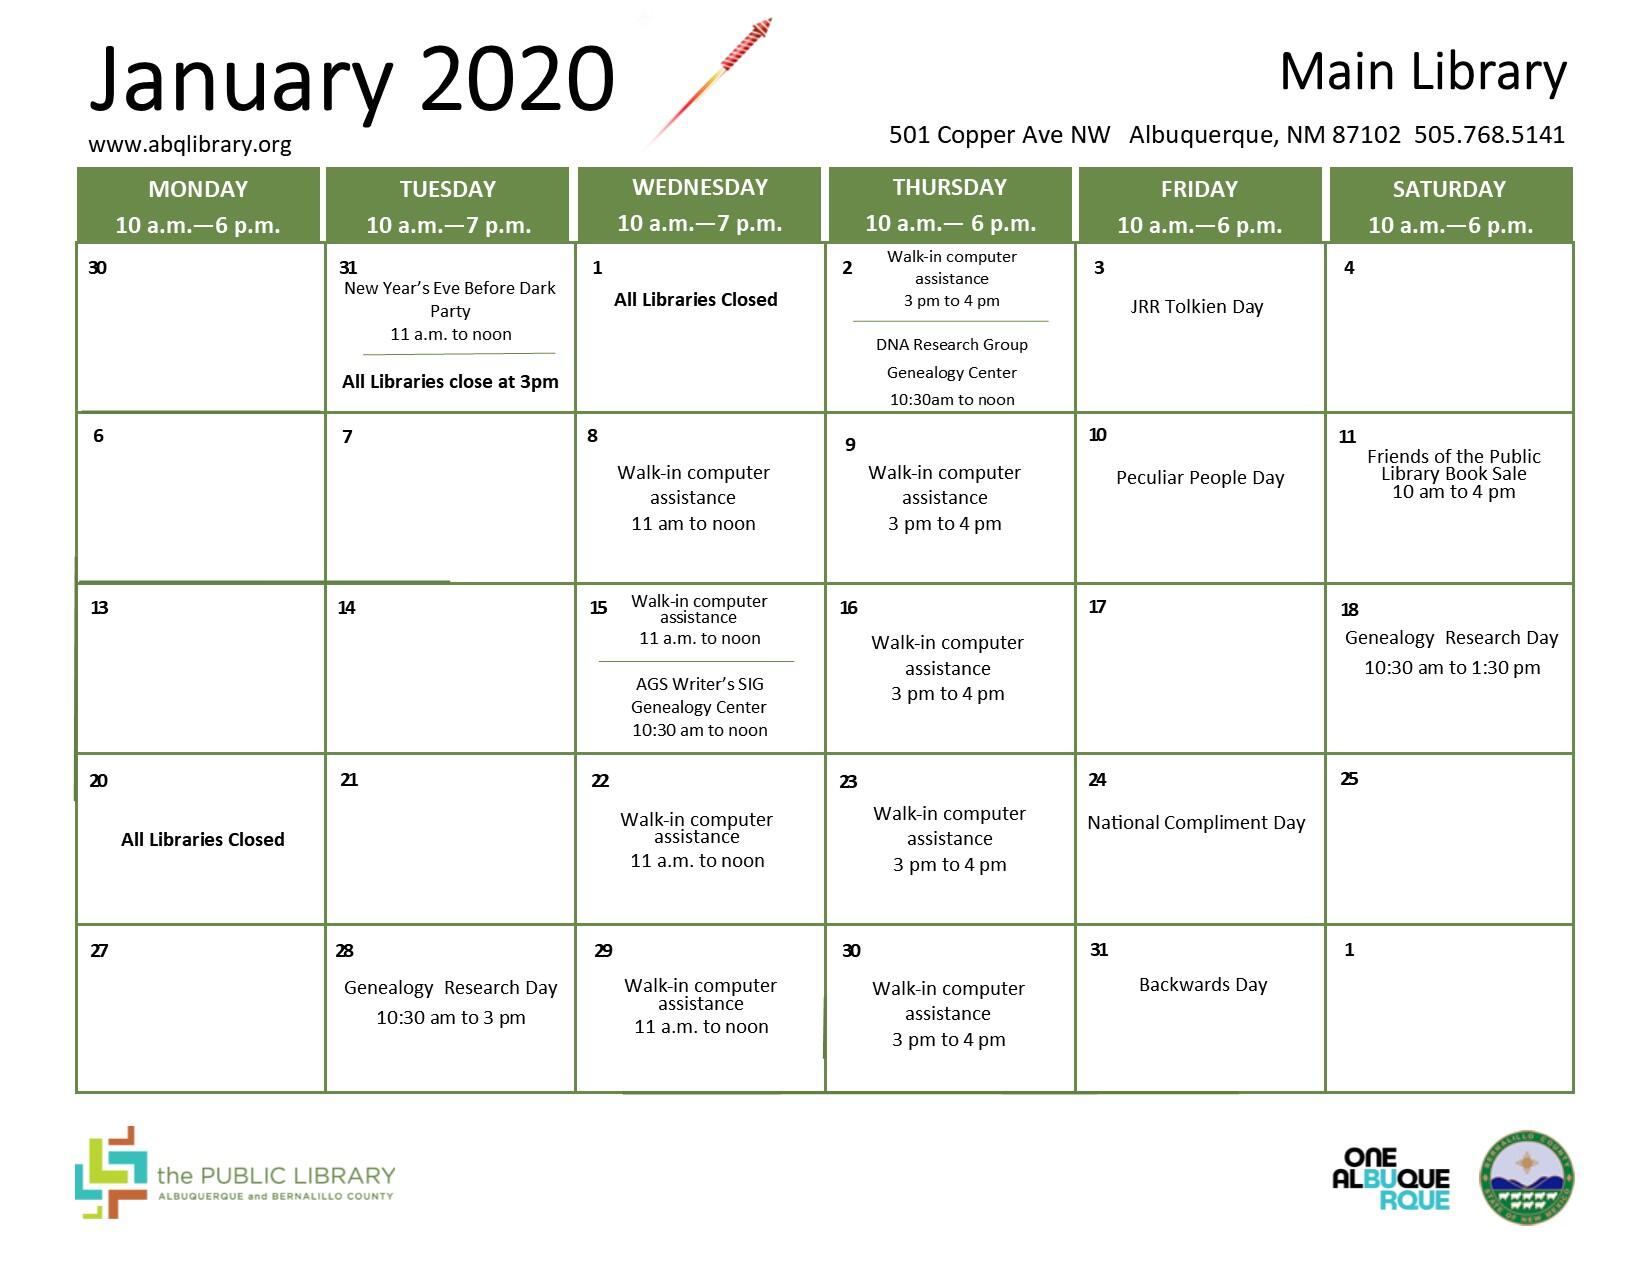 Main Library January 2020 Calendar Programs (City of Albuquerque